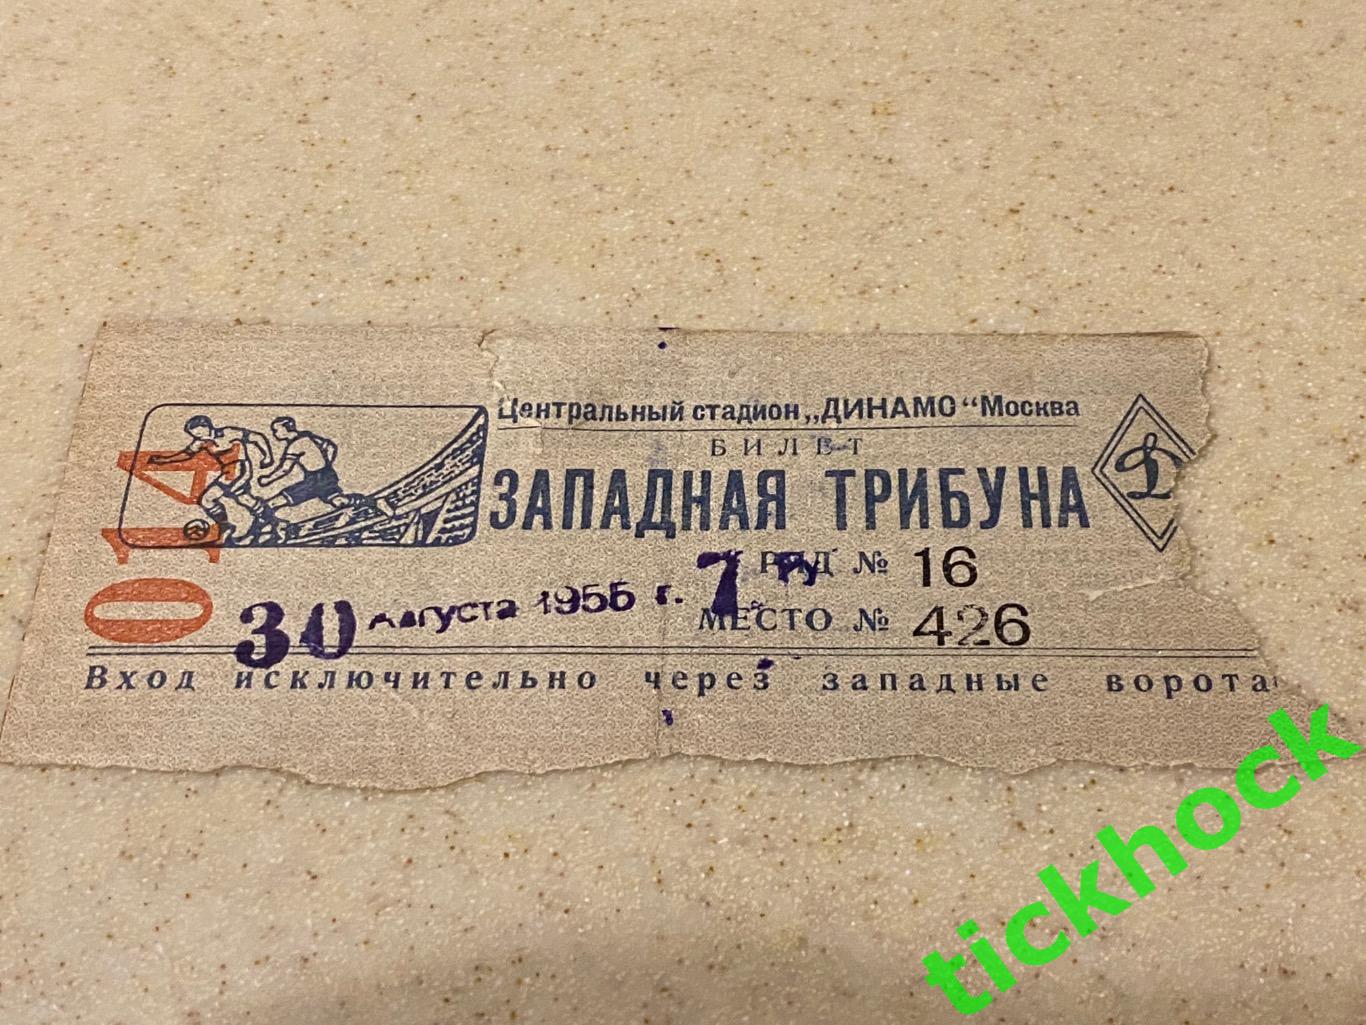 Спартак Москва - Торпедо Москва 30.08.1955-- билет -- Западная трибуна